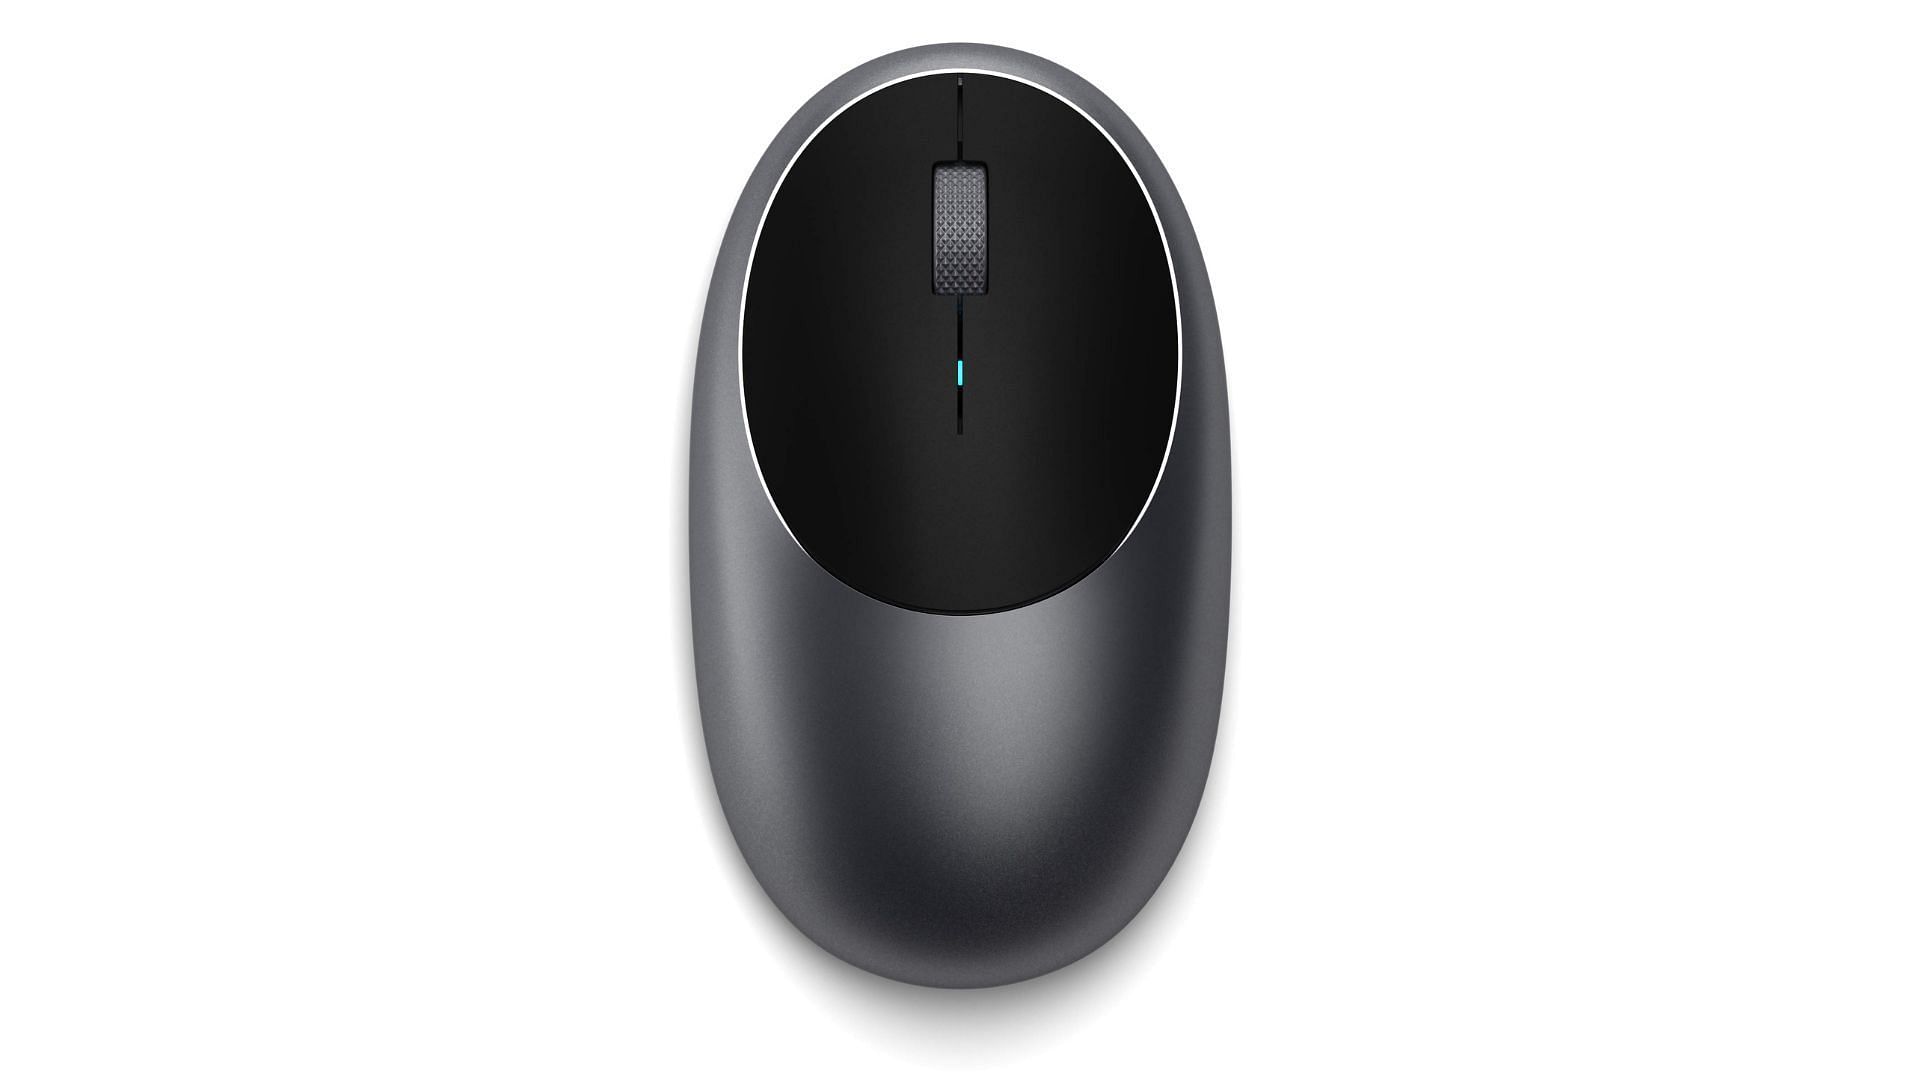 Satechi M1 Wireless Mouse - best Apple Magic Mouse alternatives (Image via Satechi)